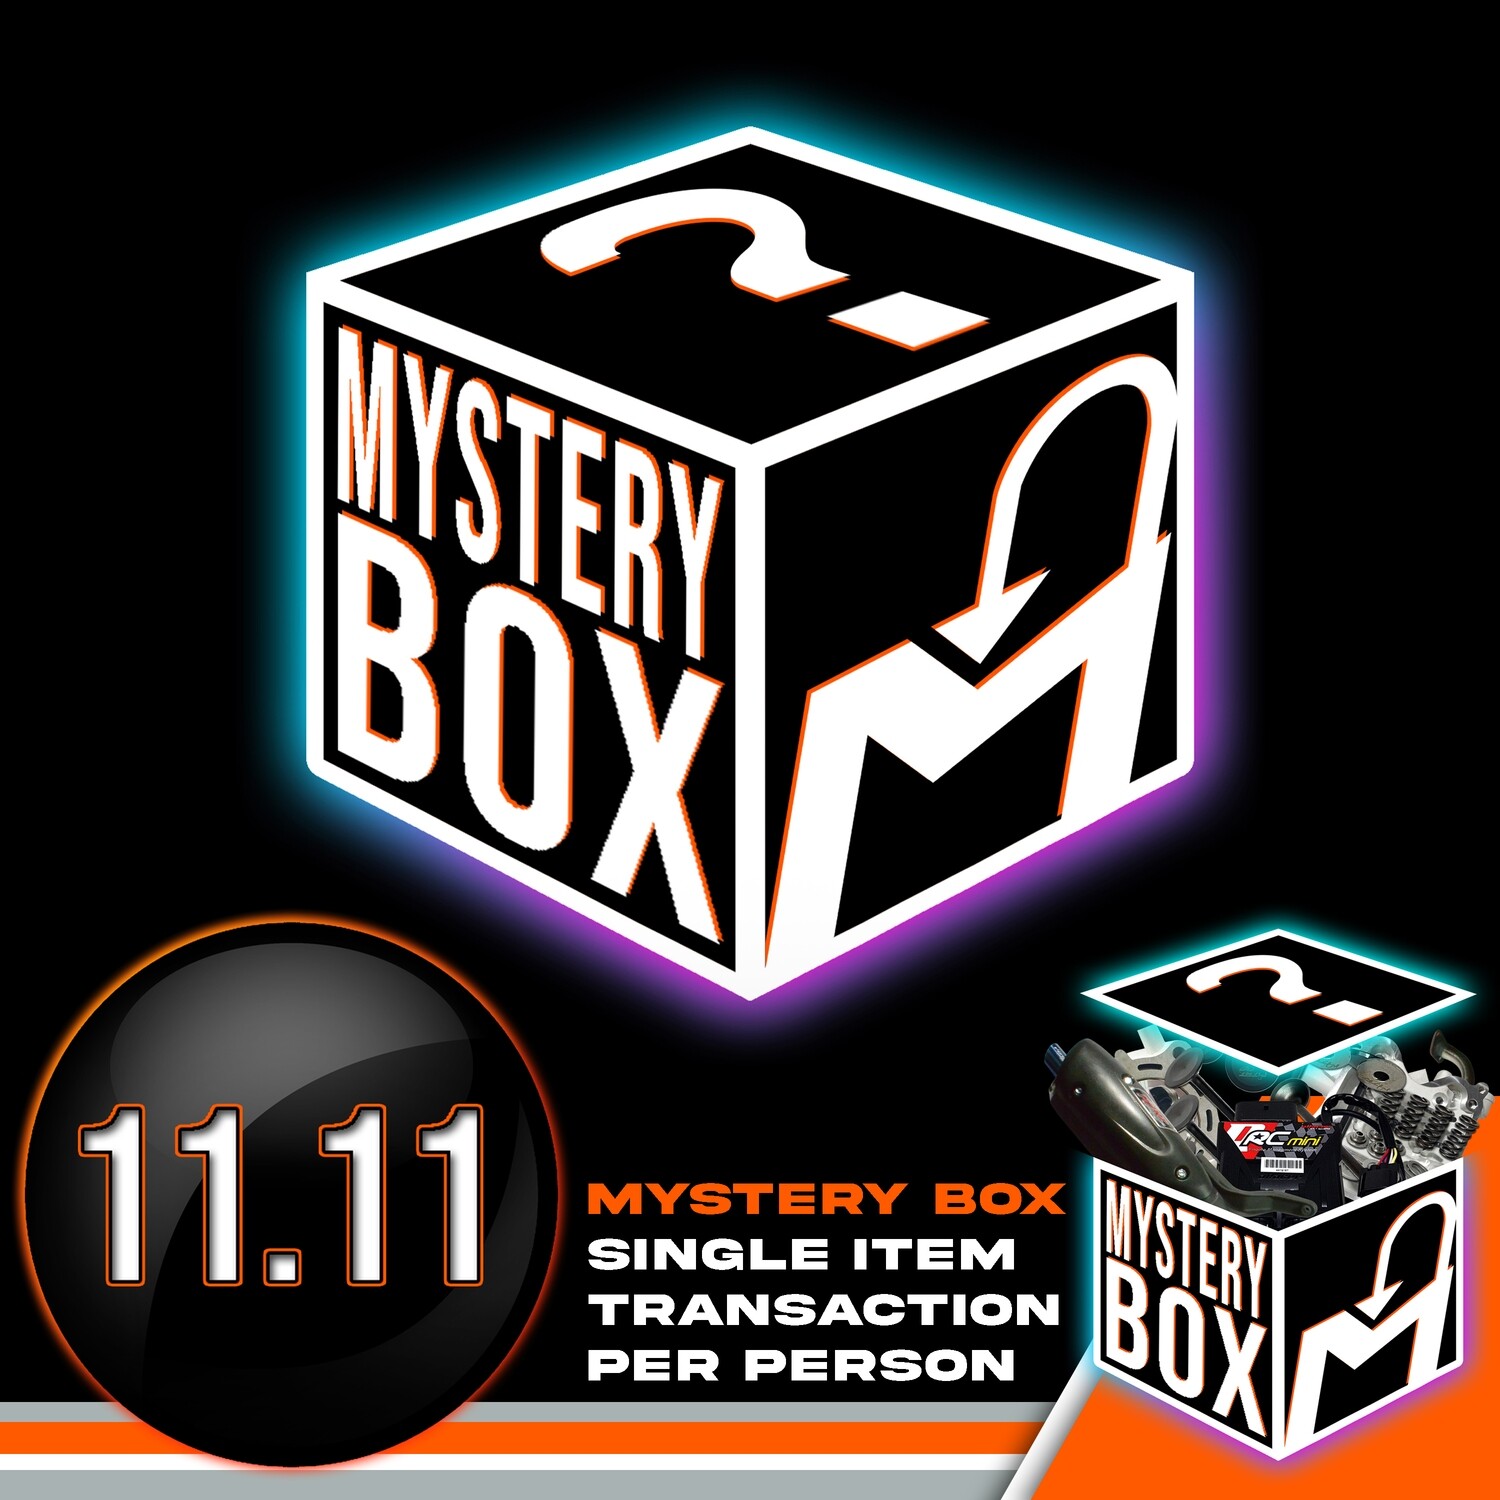 MYSTERY BOX #107 (11.11 PROMO)